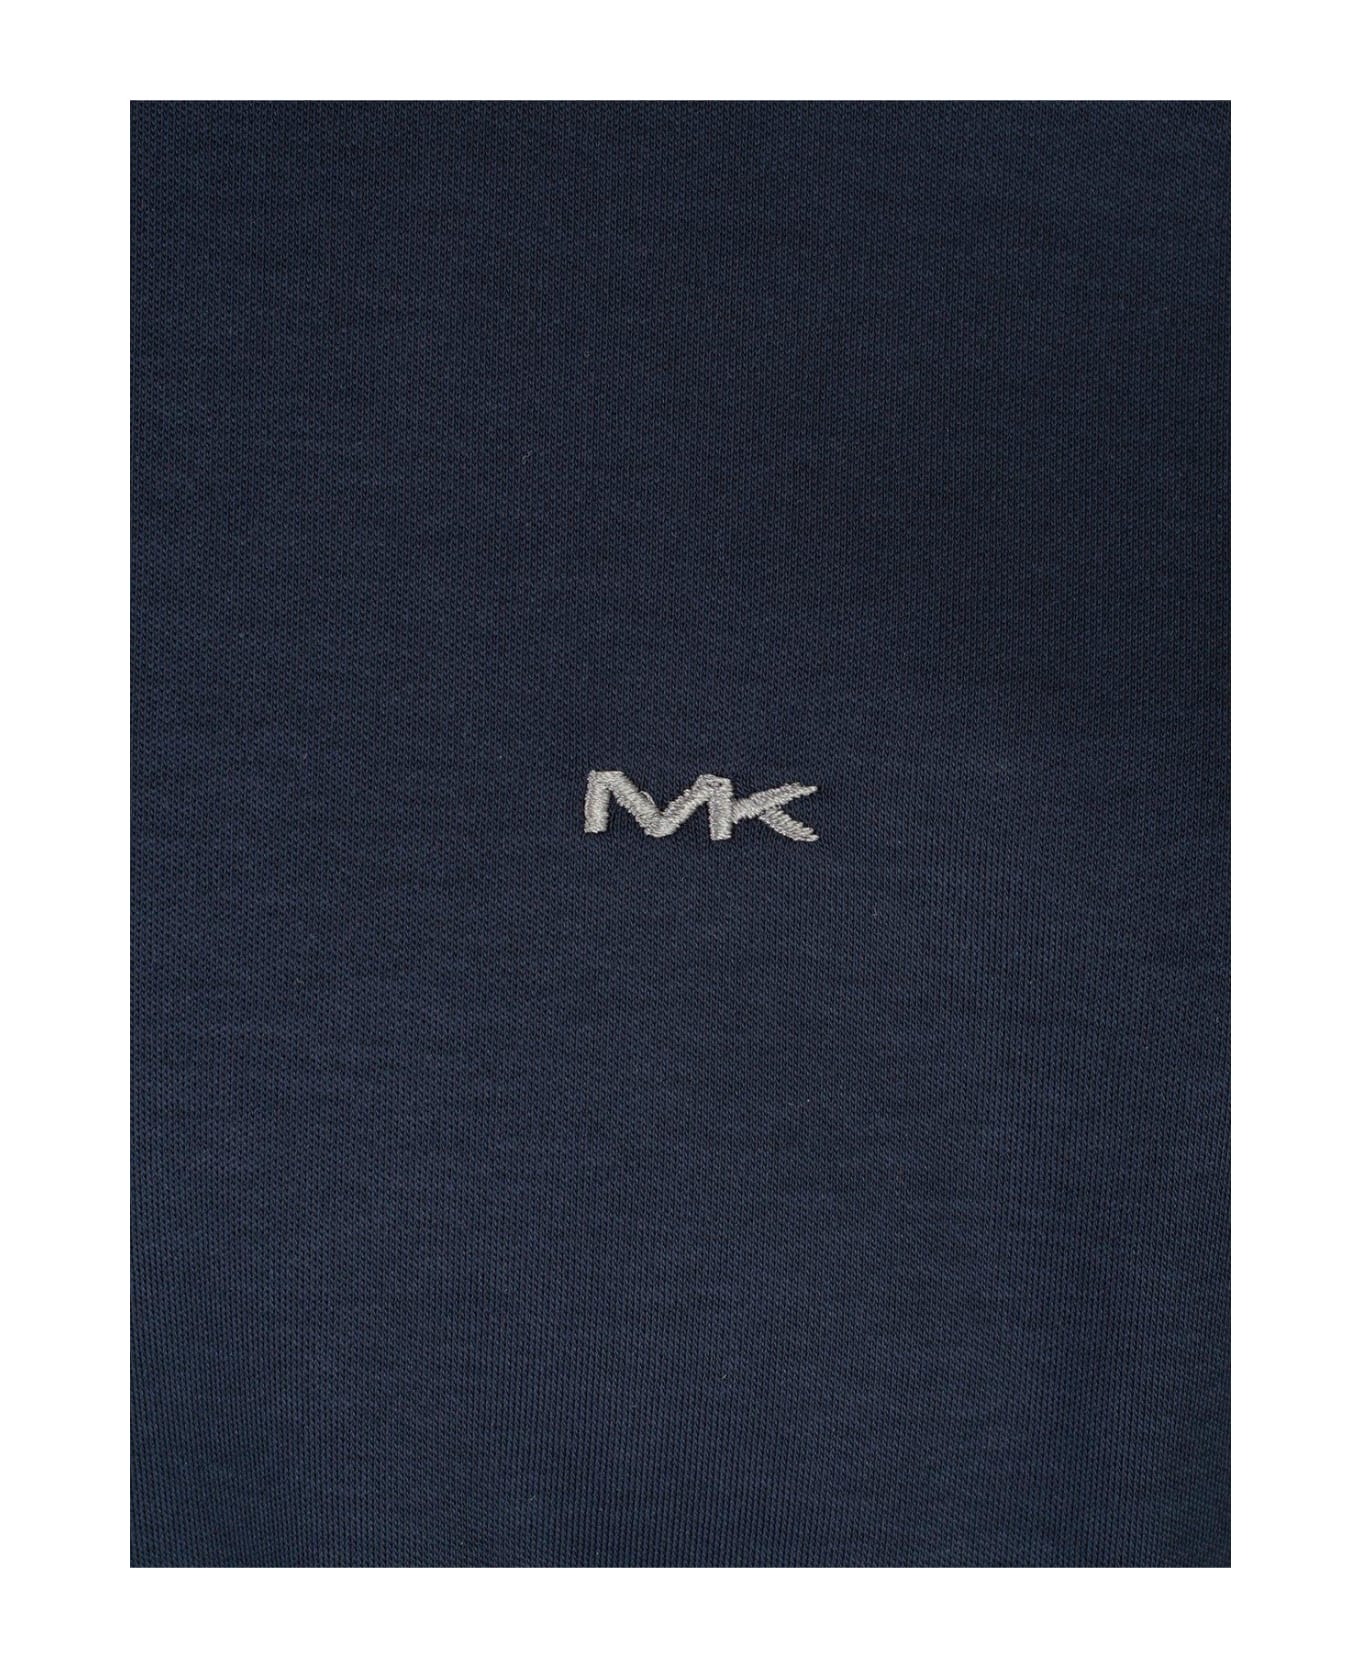 Michael Kors Long Sleeve Sleek Polo Shirt - Midnight